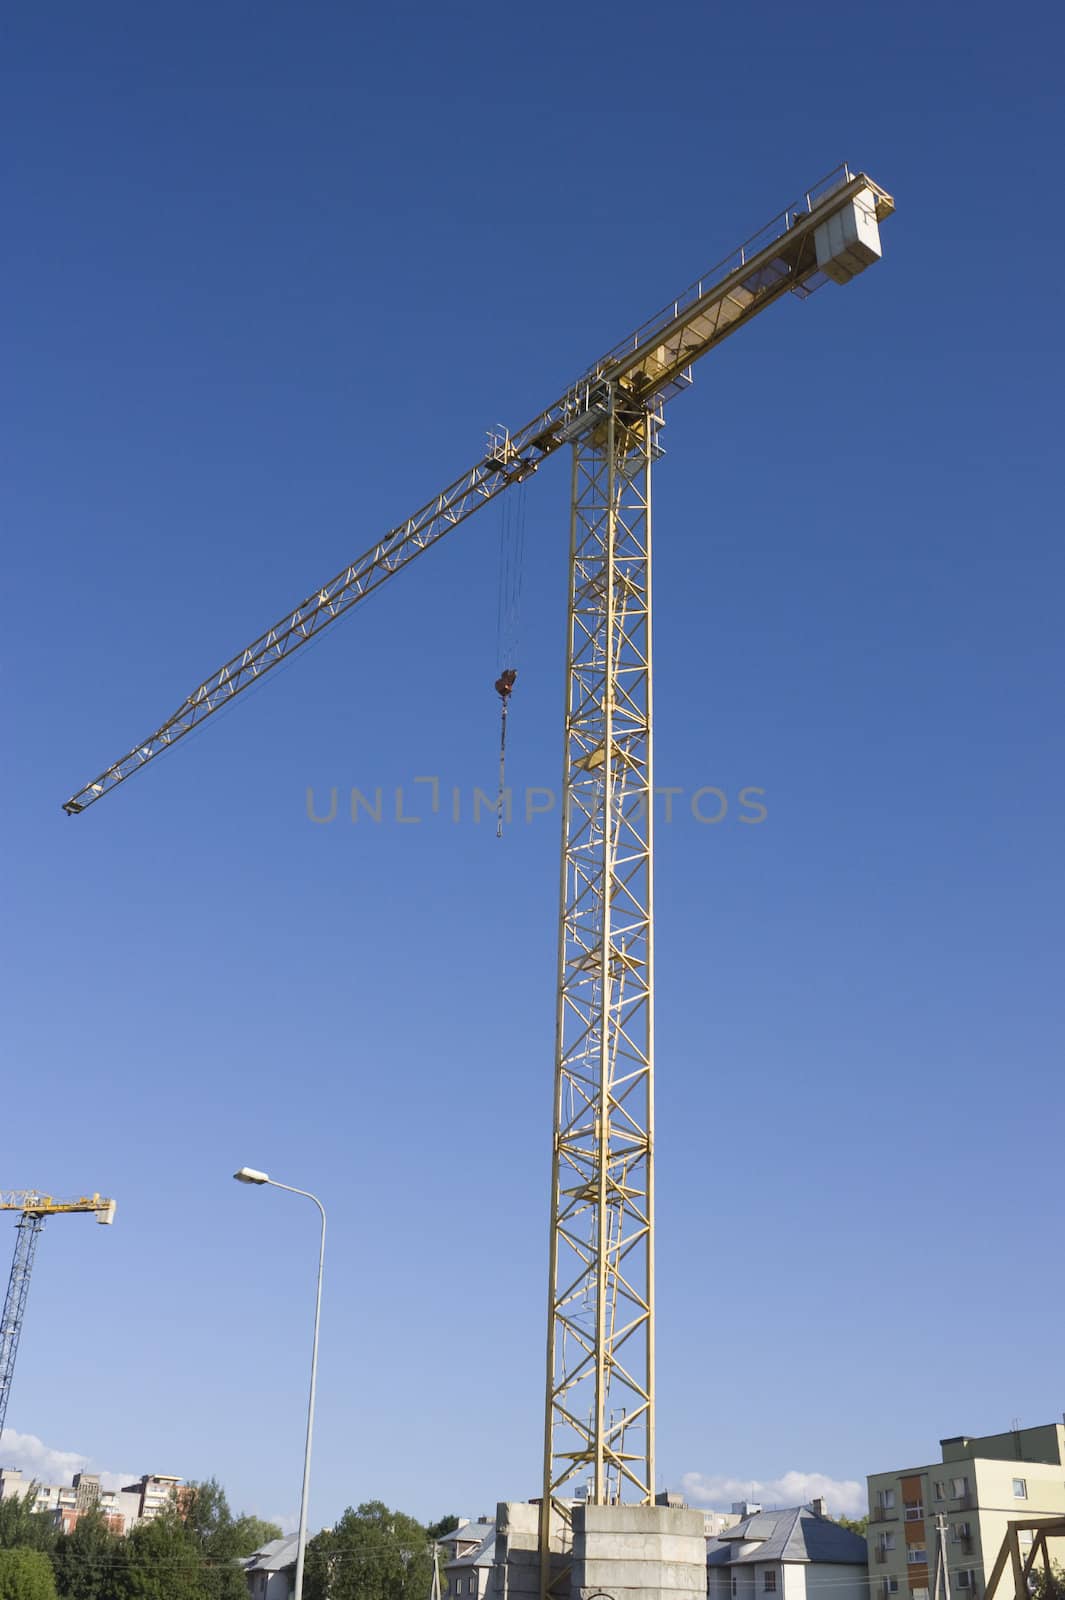 construction crane against a backdrop of blue sky